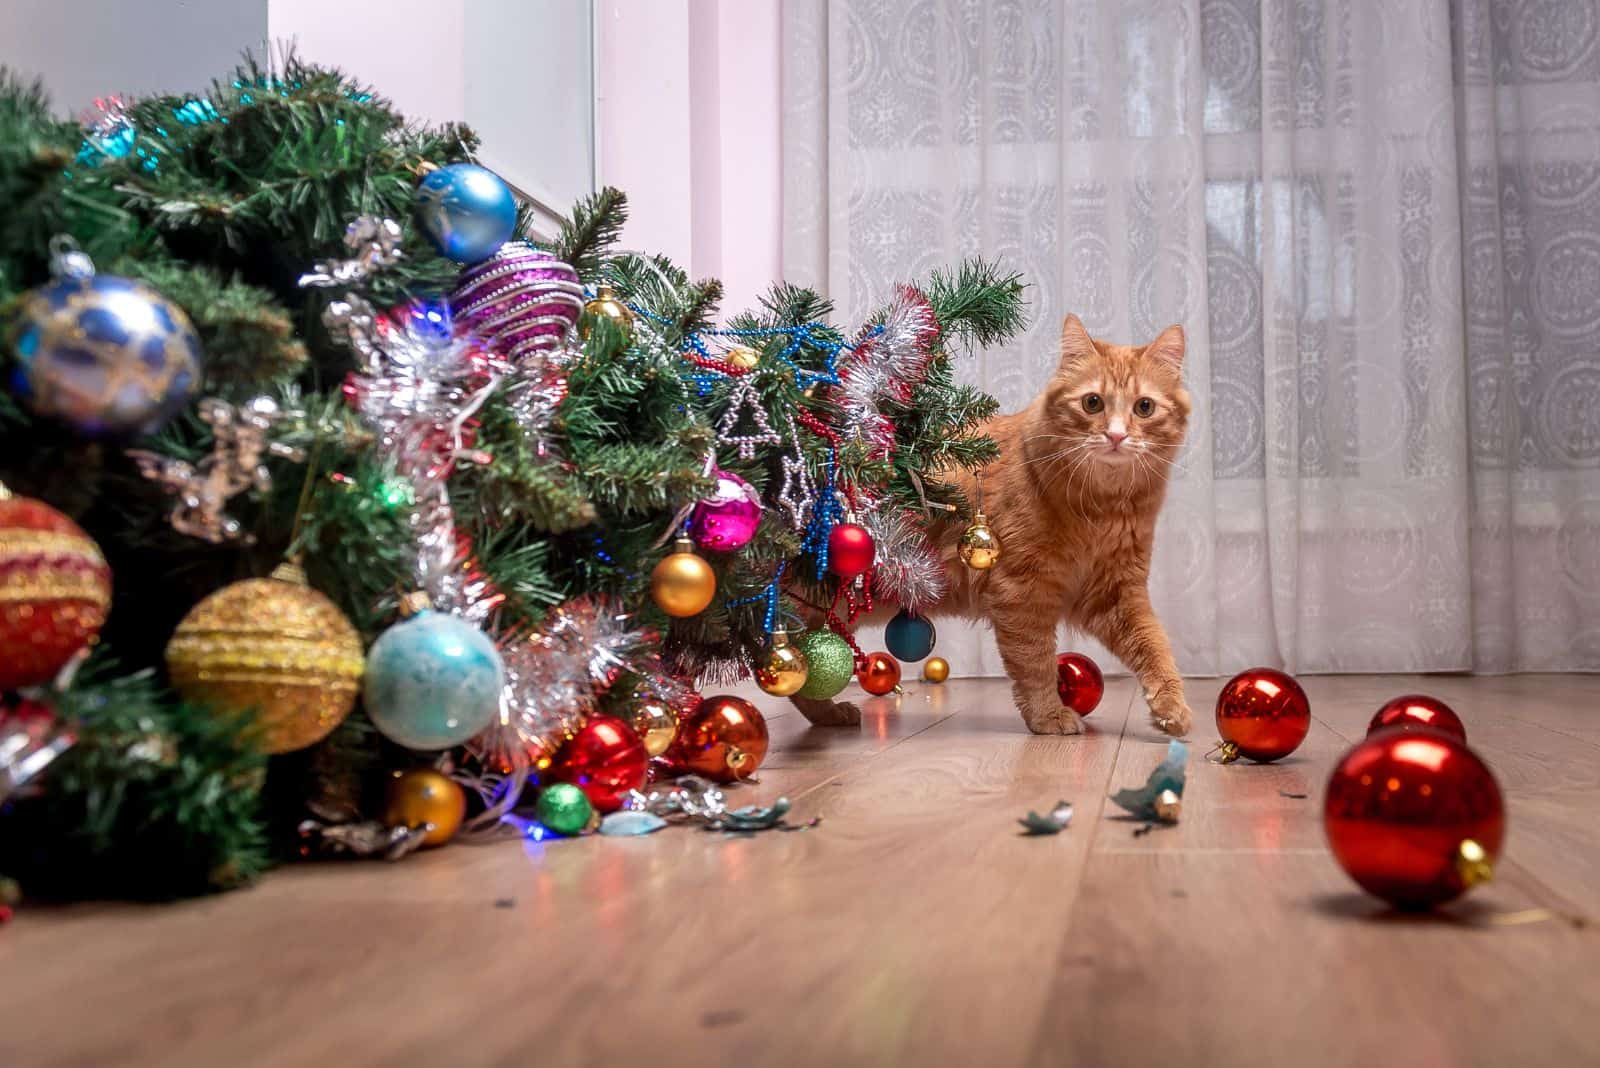 the cat walks around the Christmas tree